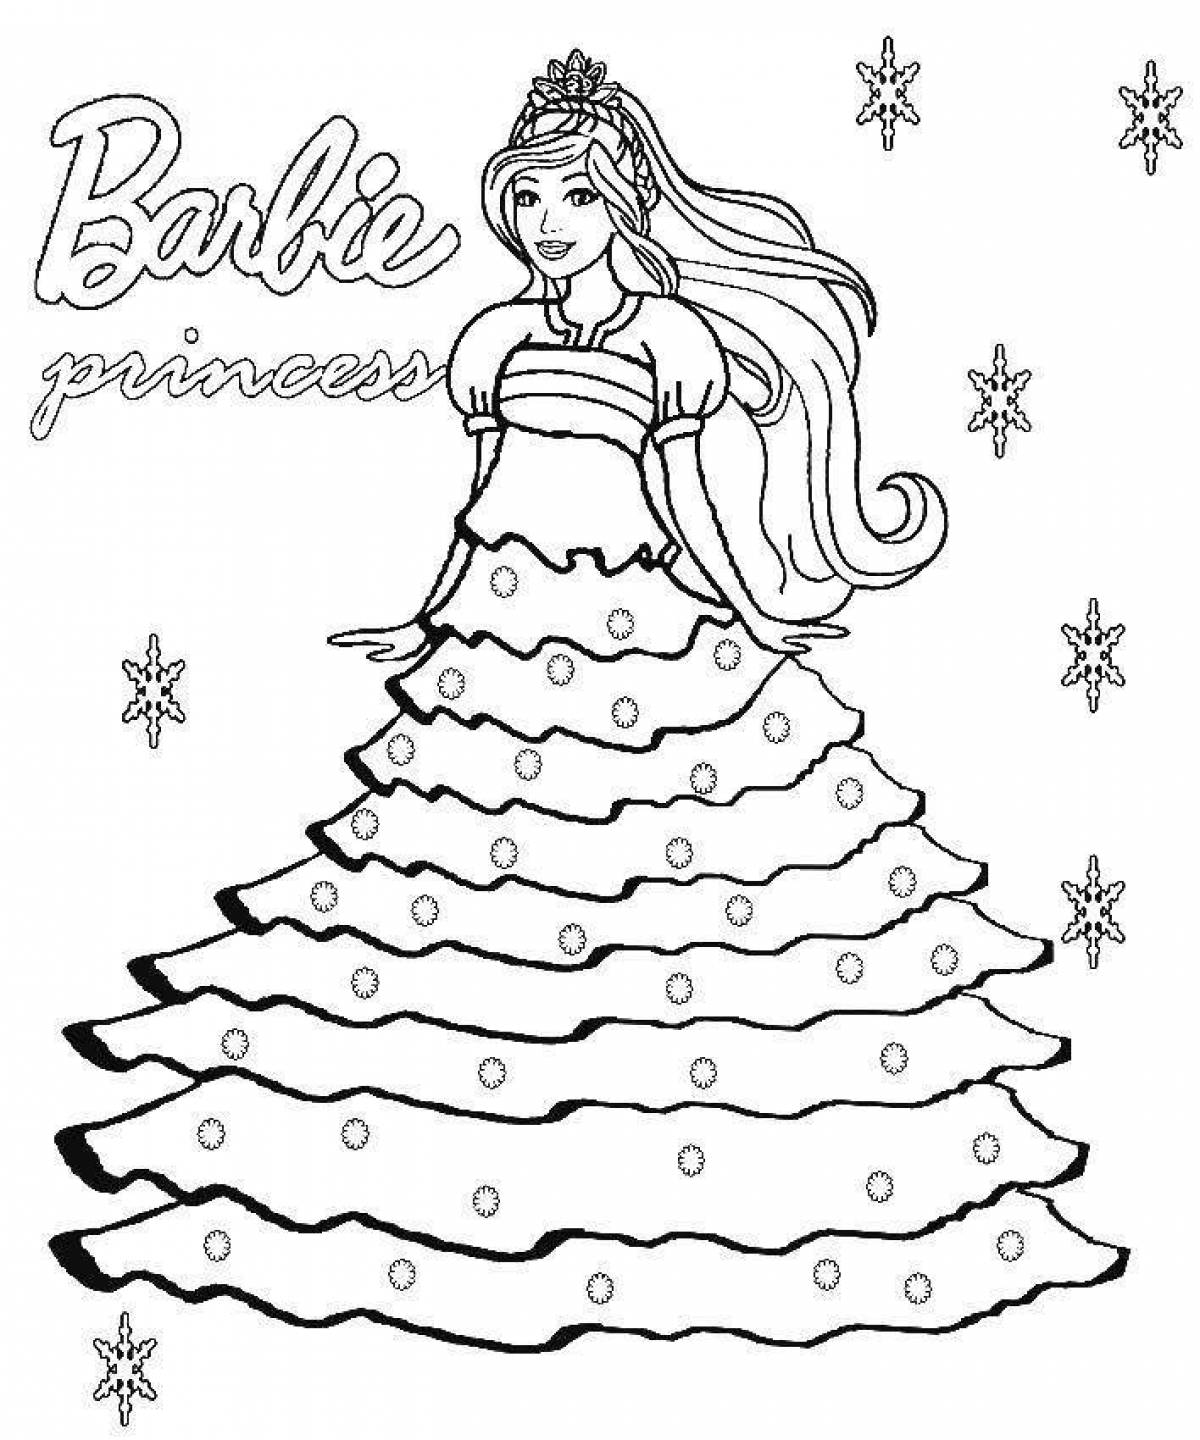 Fascinating Barbie Christmas coloring book